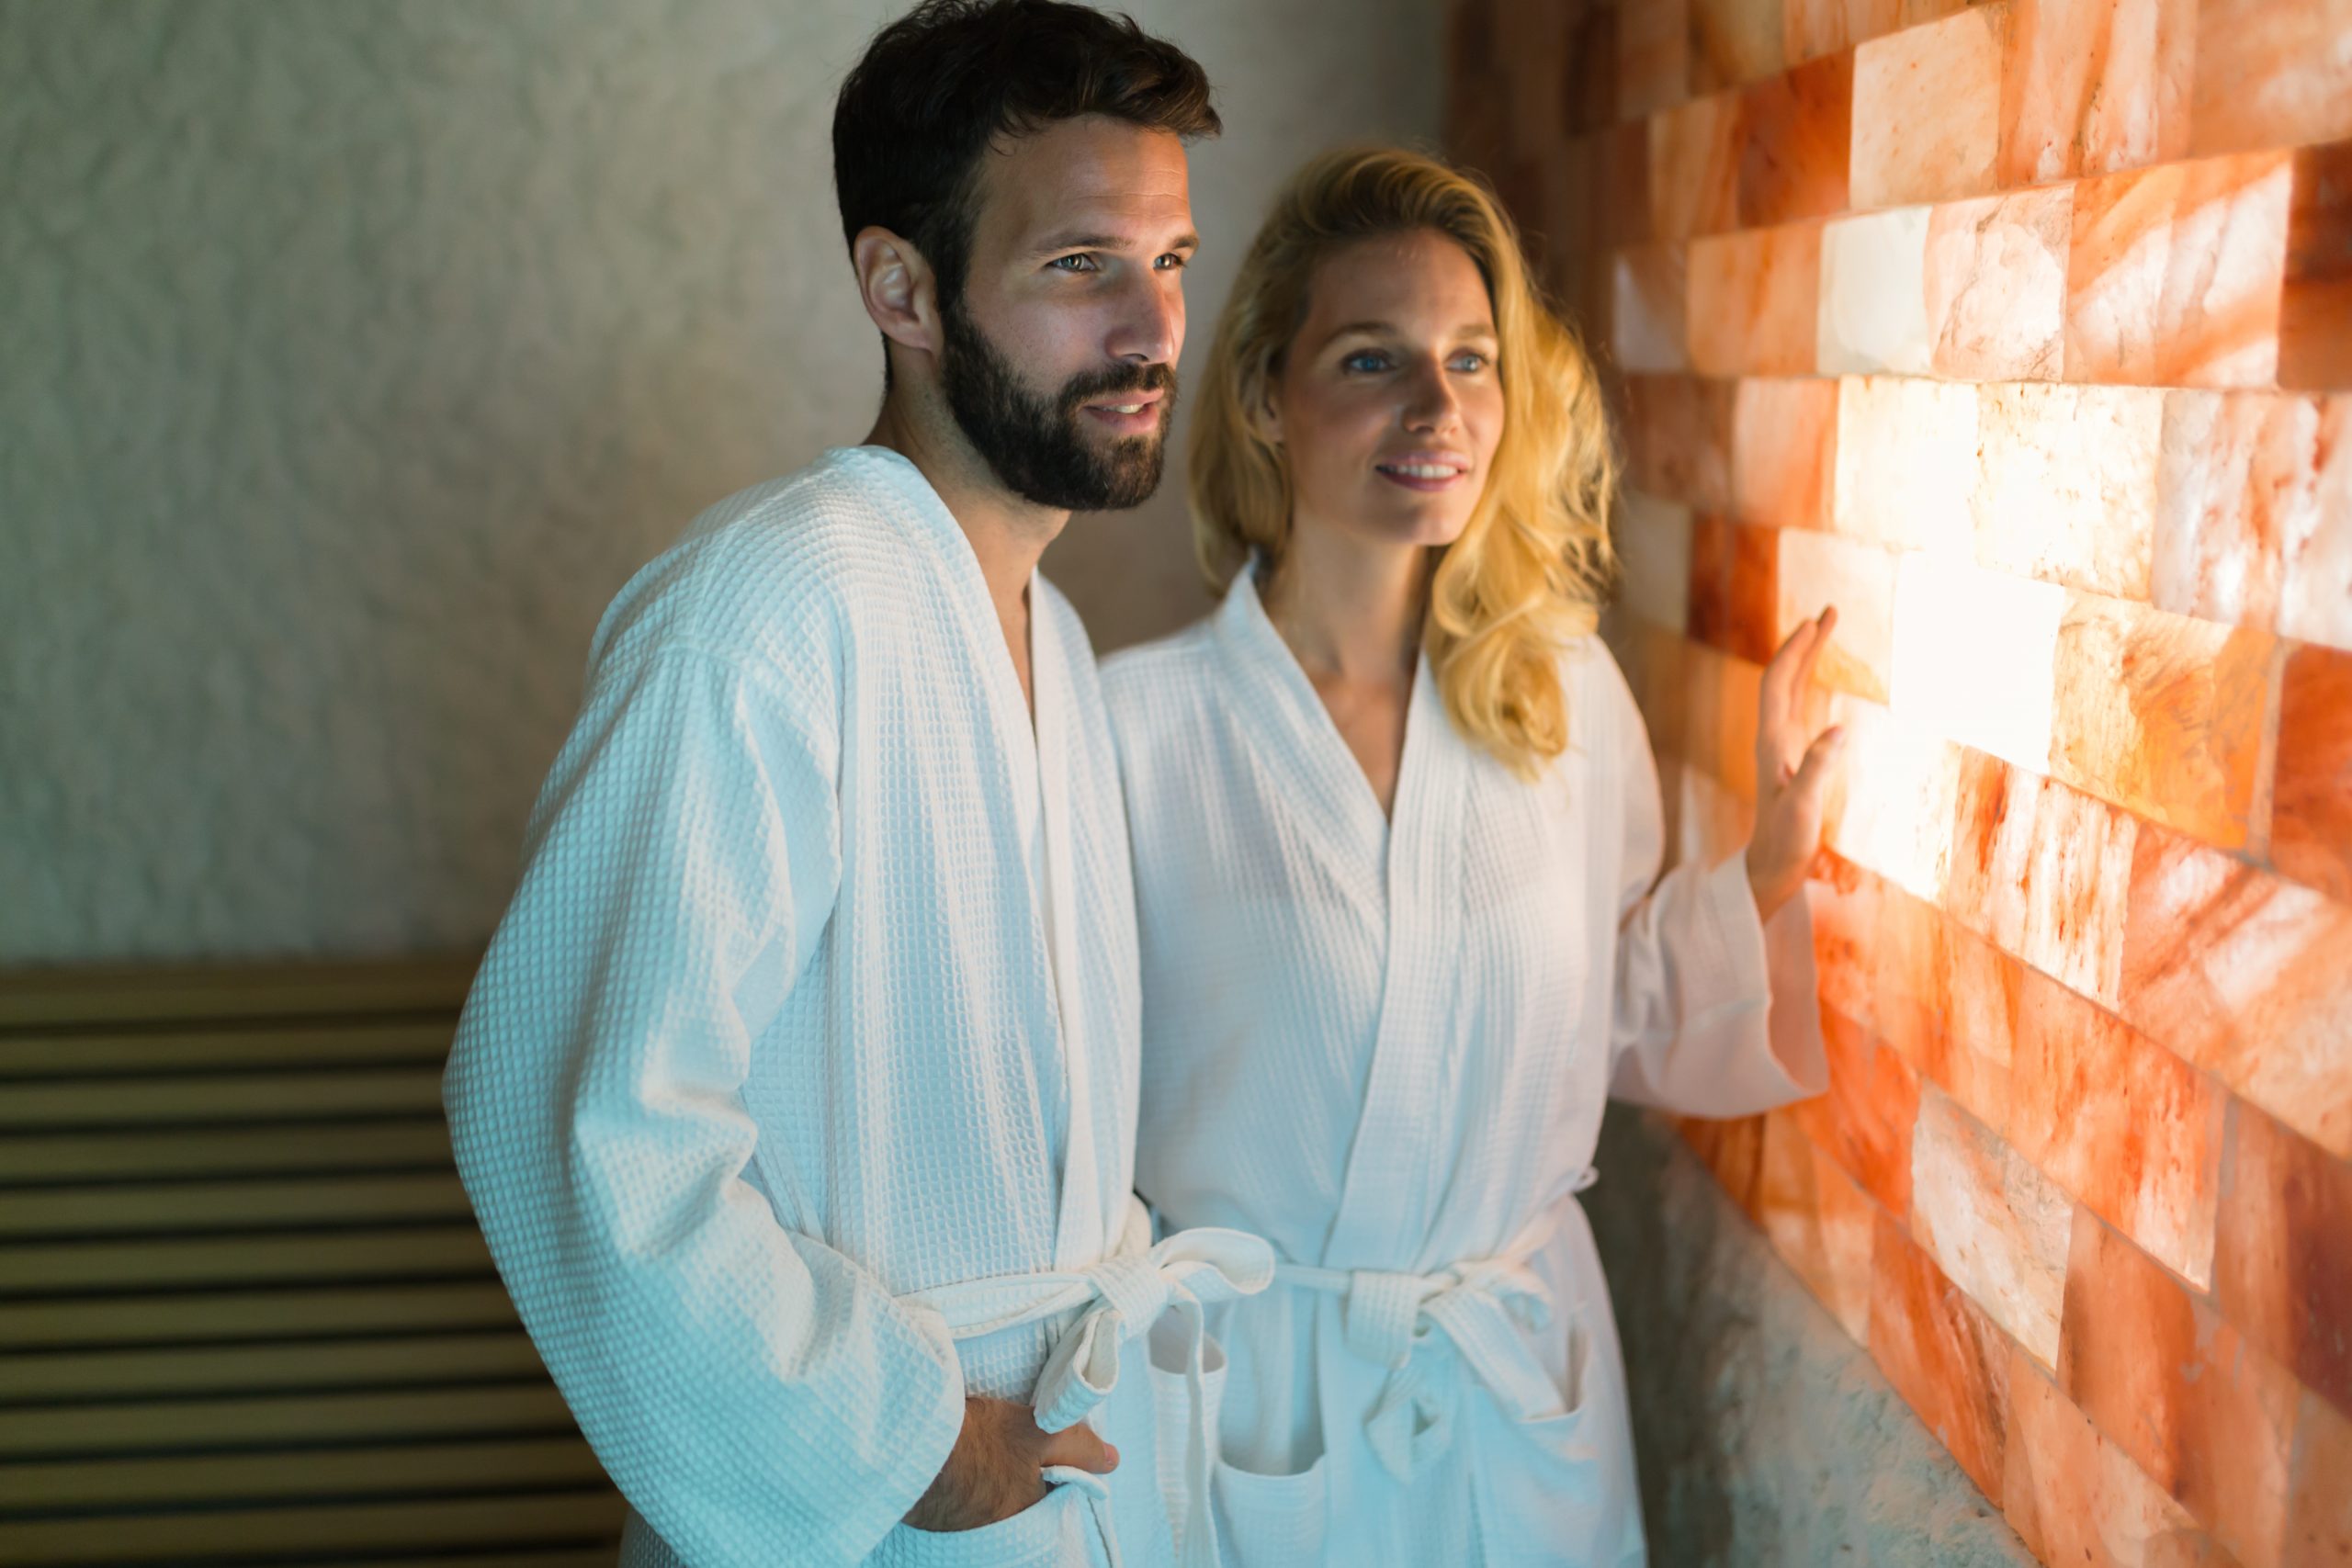 Couple enjoying salt room therapy at spa resort